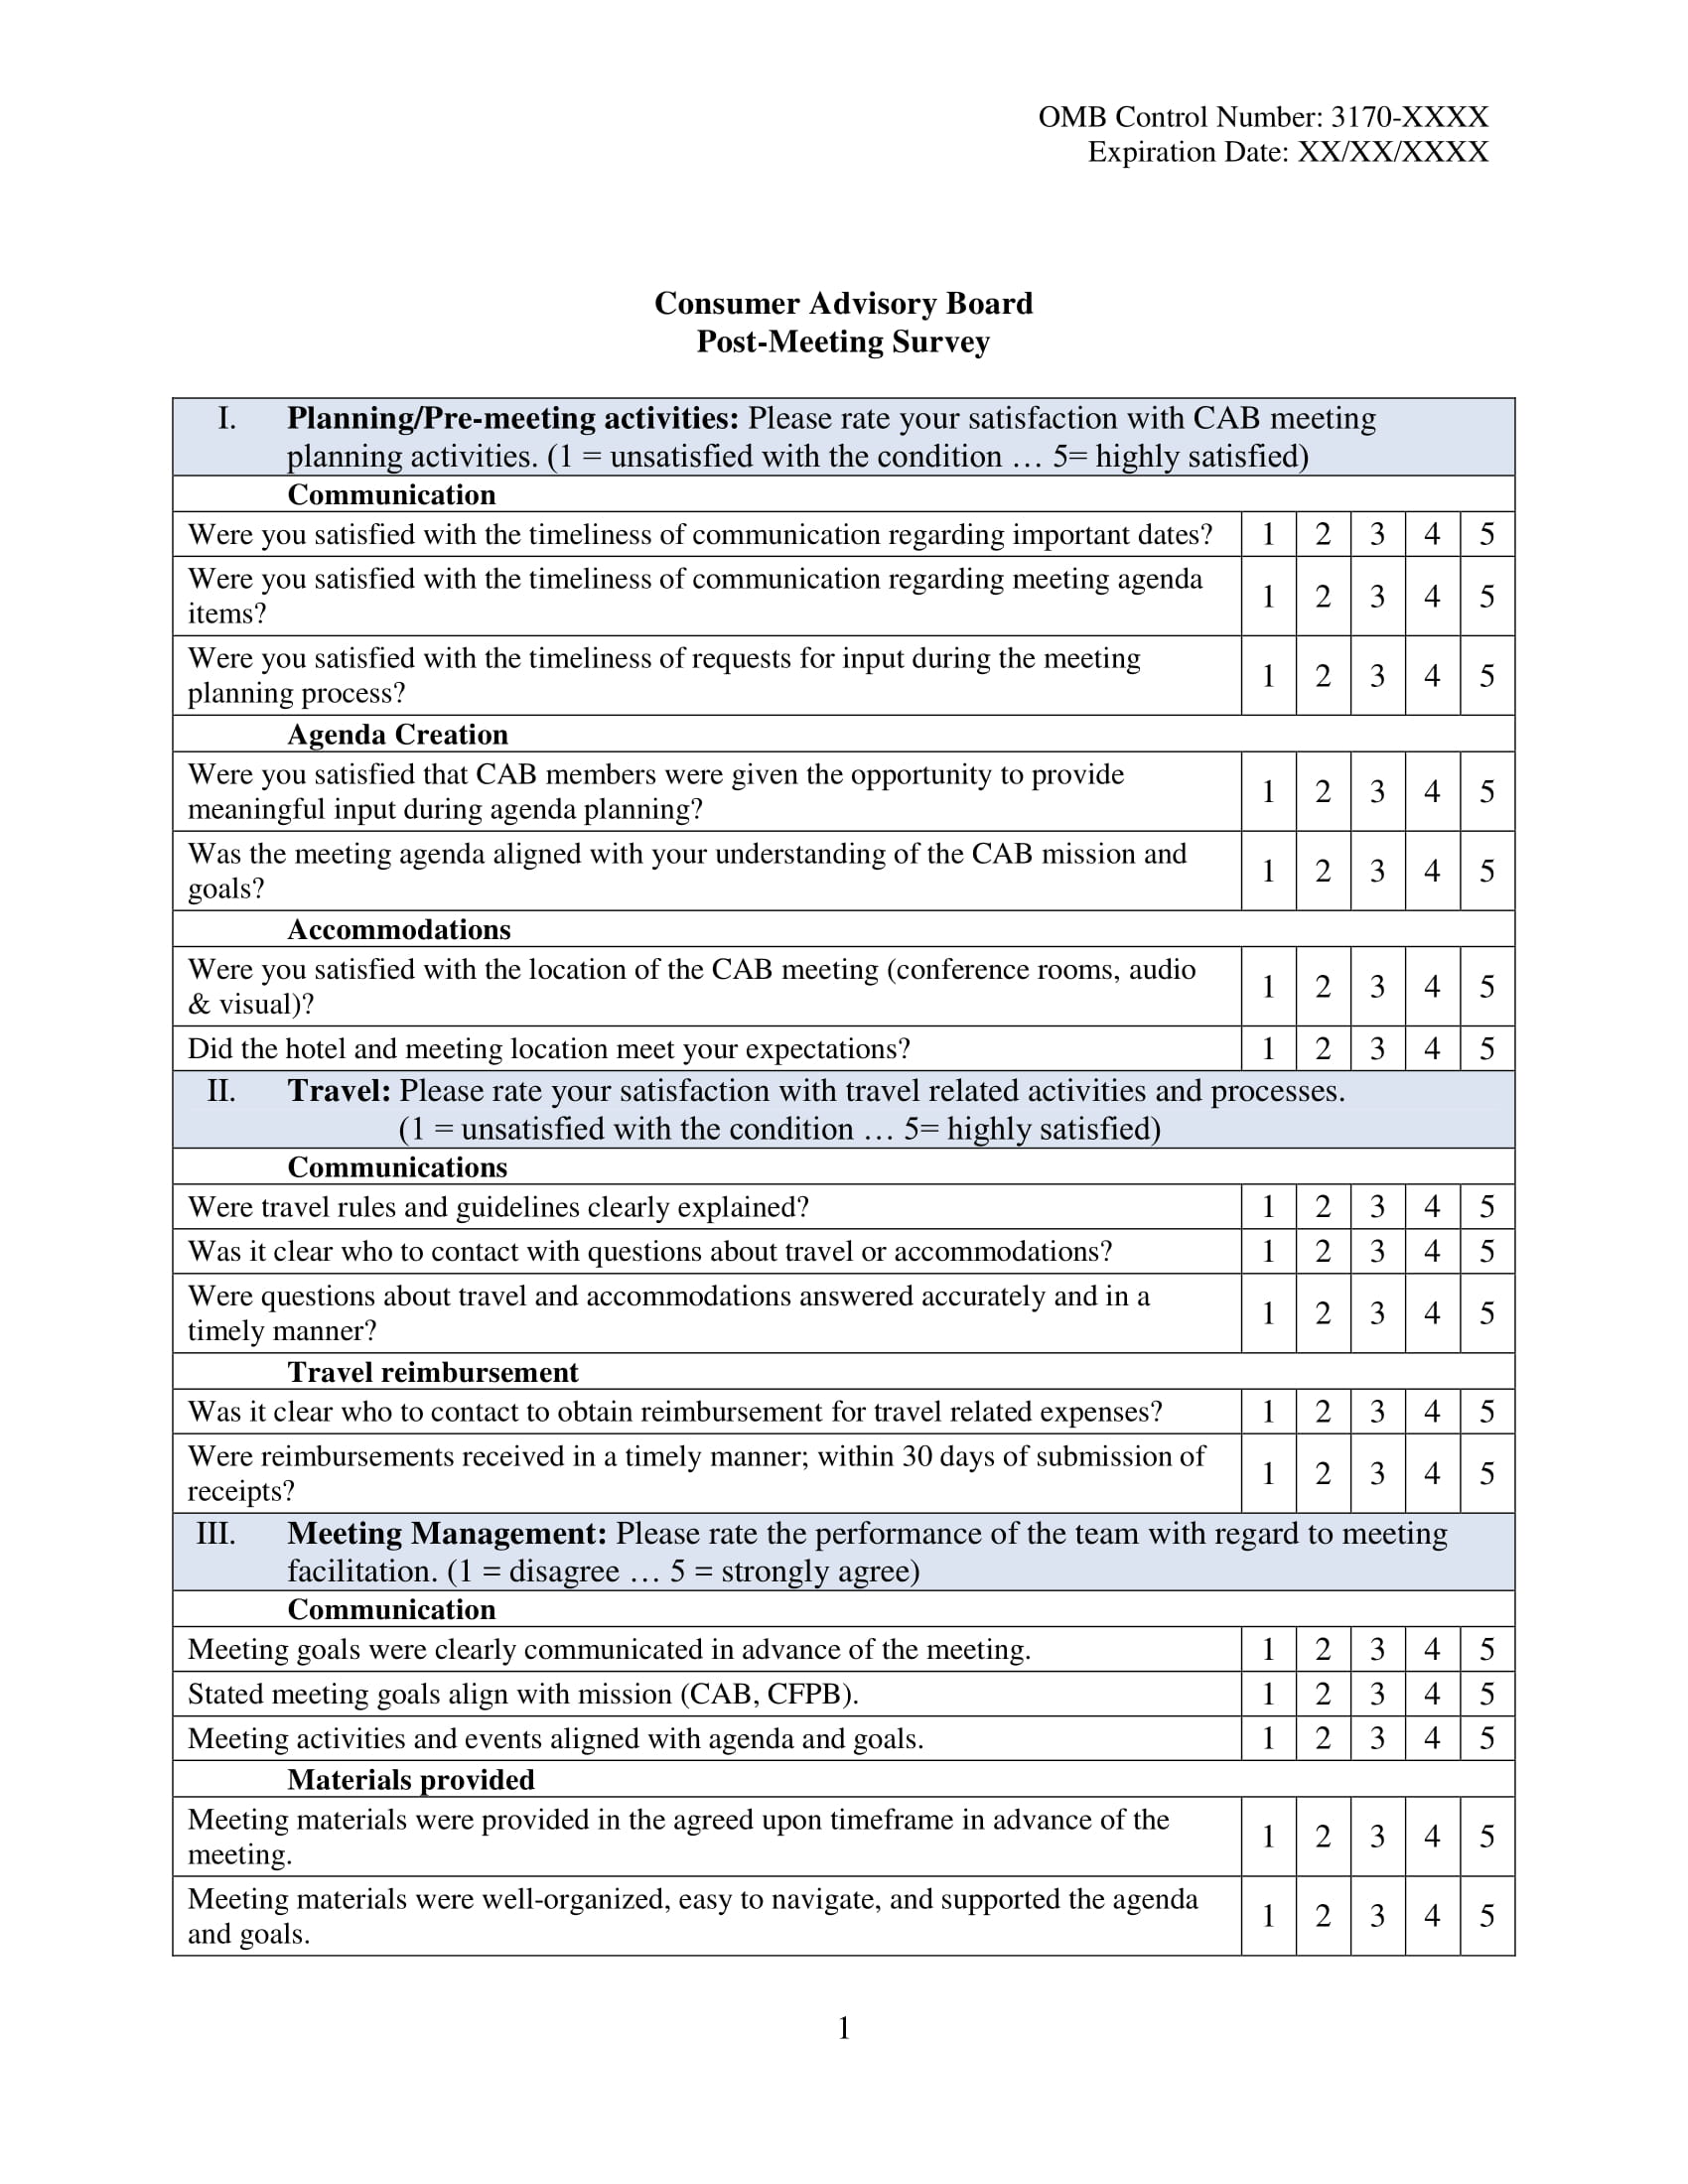 Consumer Advisory Board Post-Meeting Survey Example